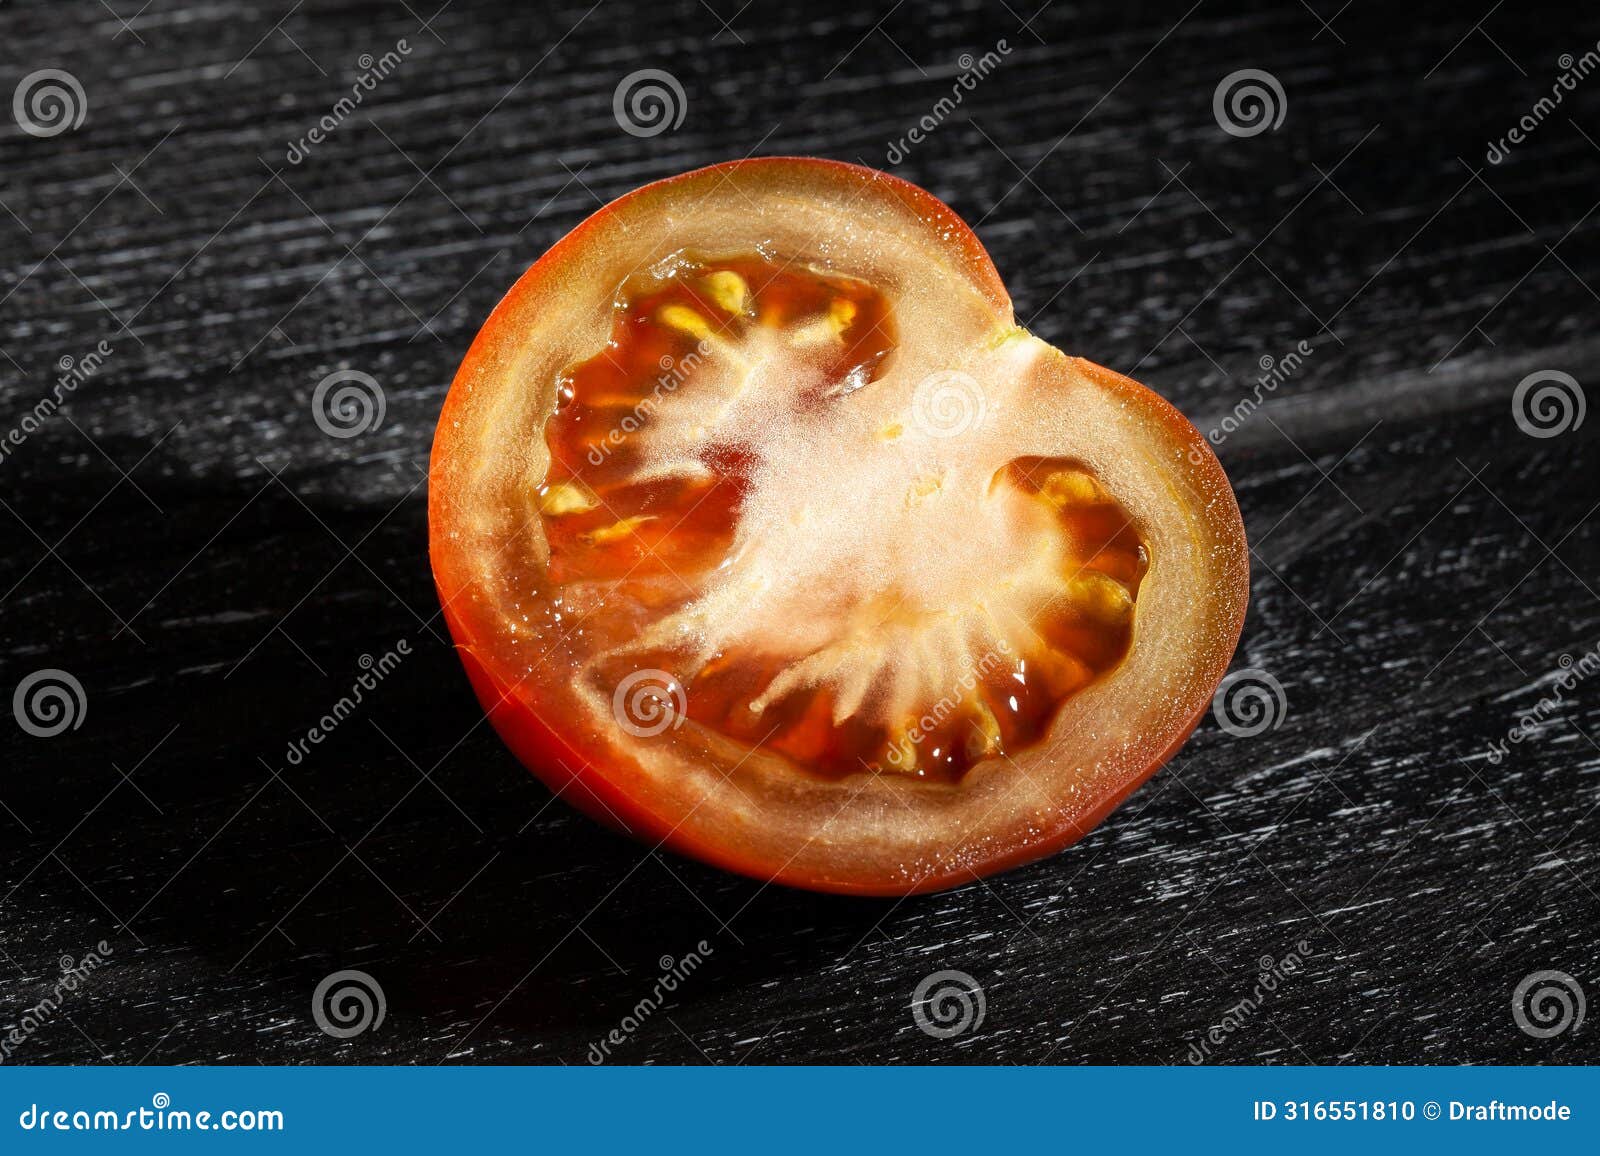 sliced kumato tomato on black wood